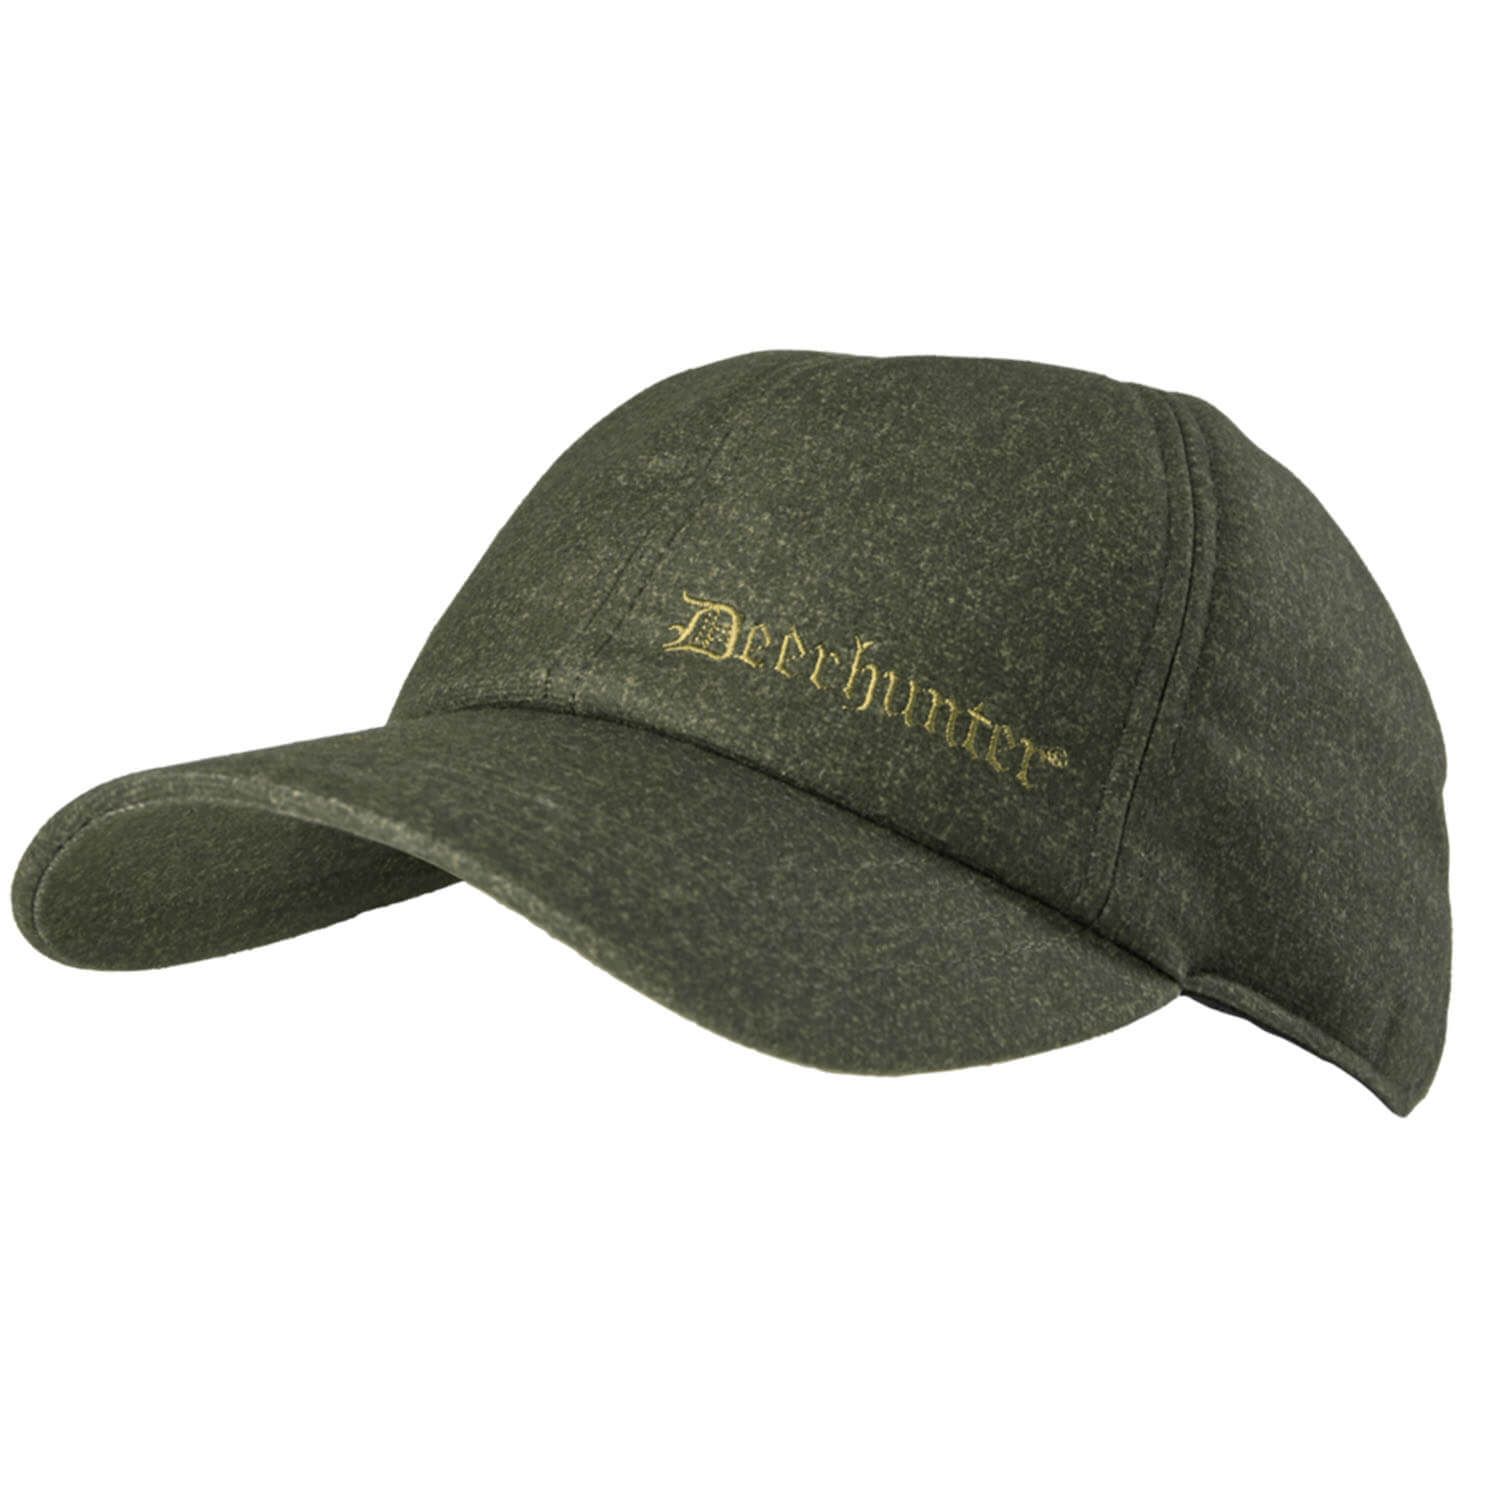 Deerhunter Cap Ram Winter (Elmwood) - Beanies & Caps